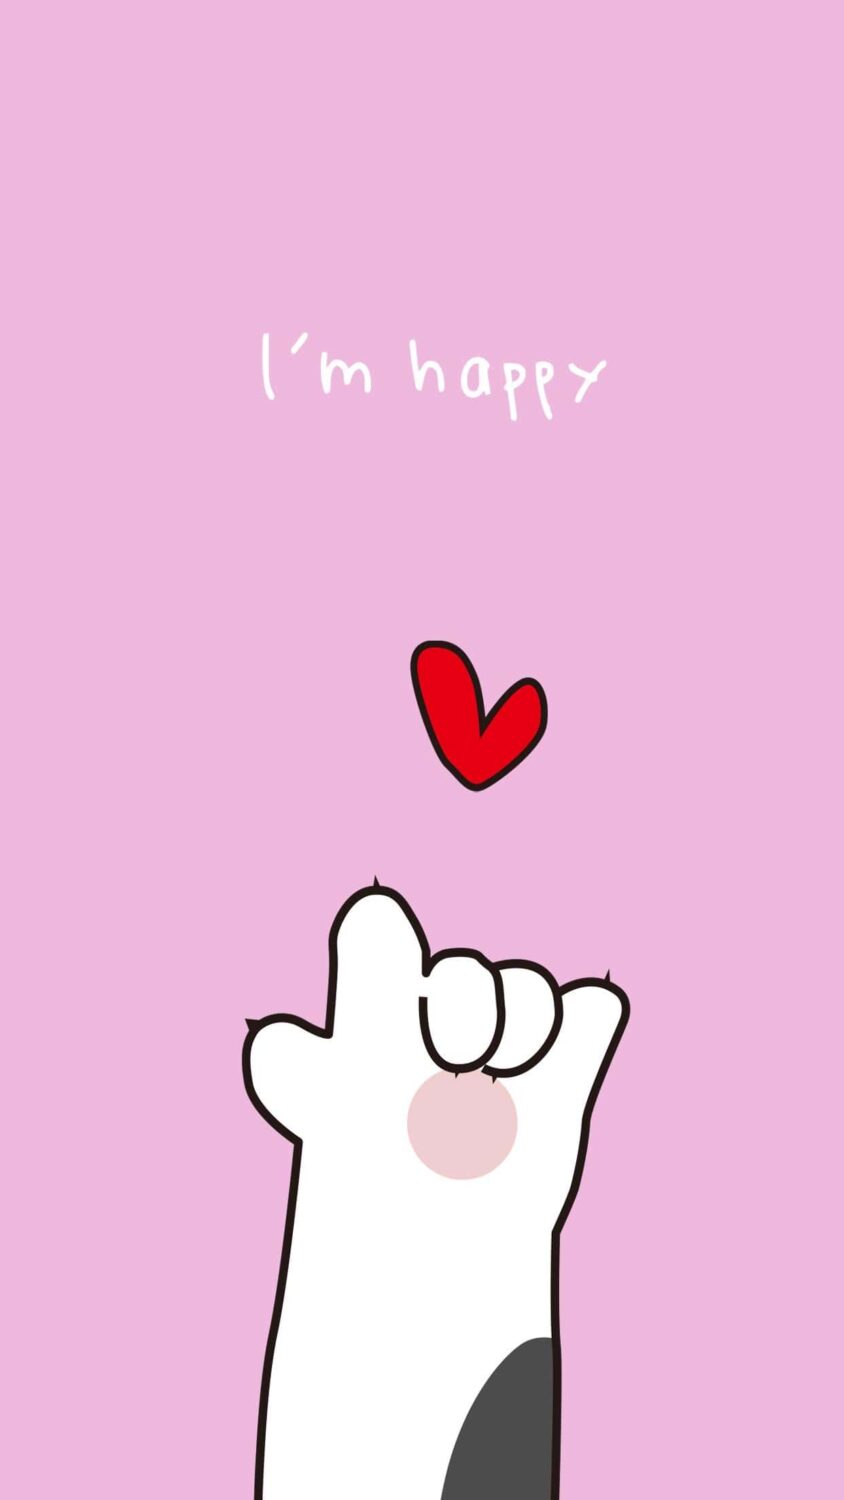 I’m happy